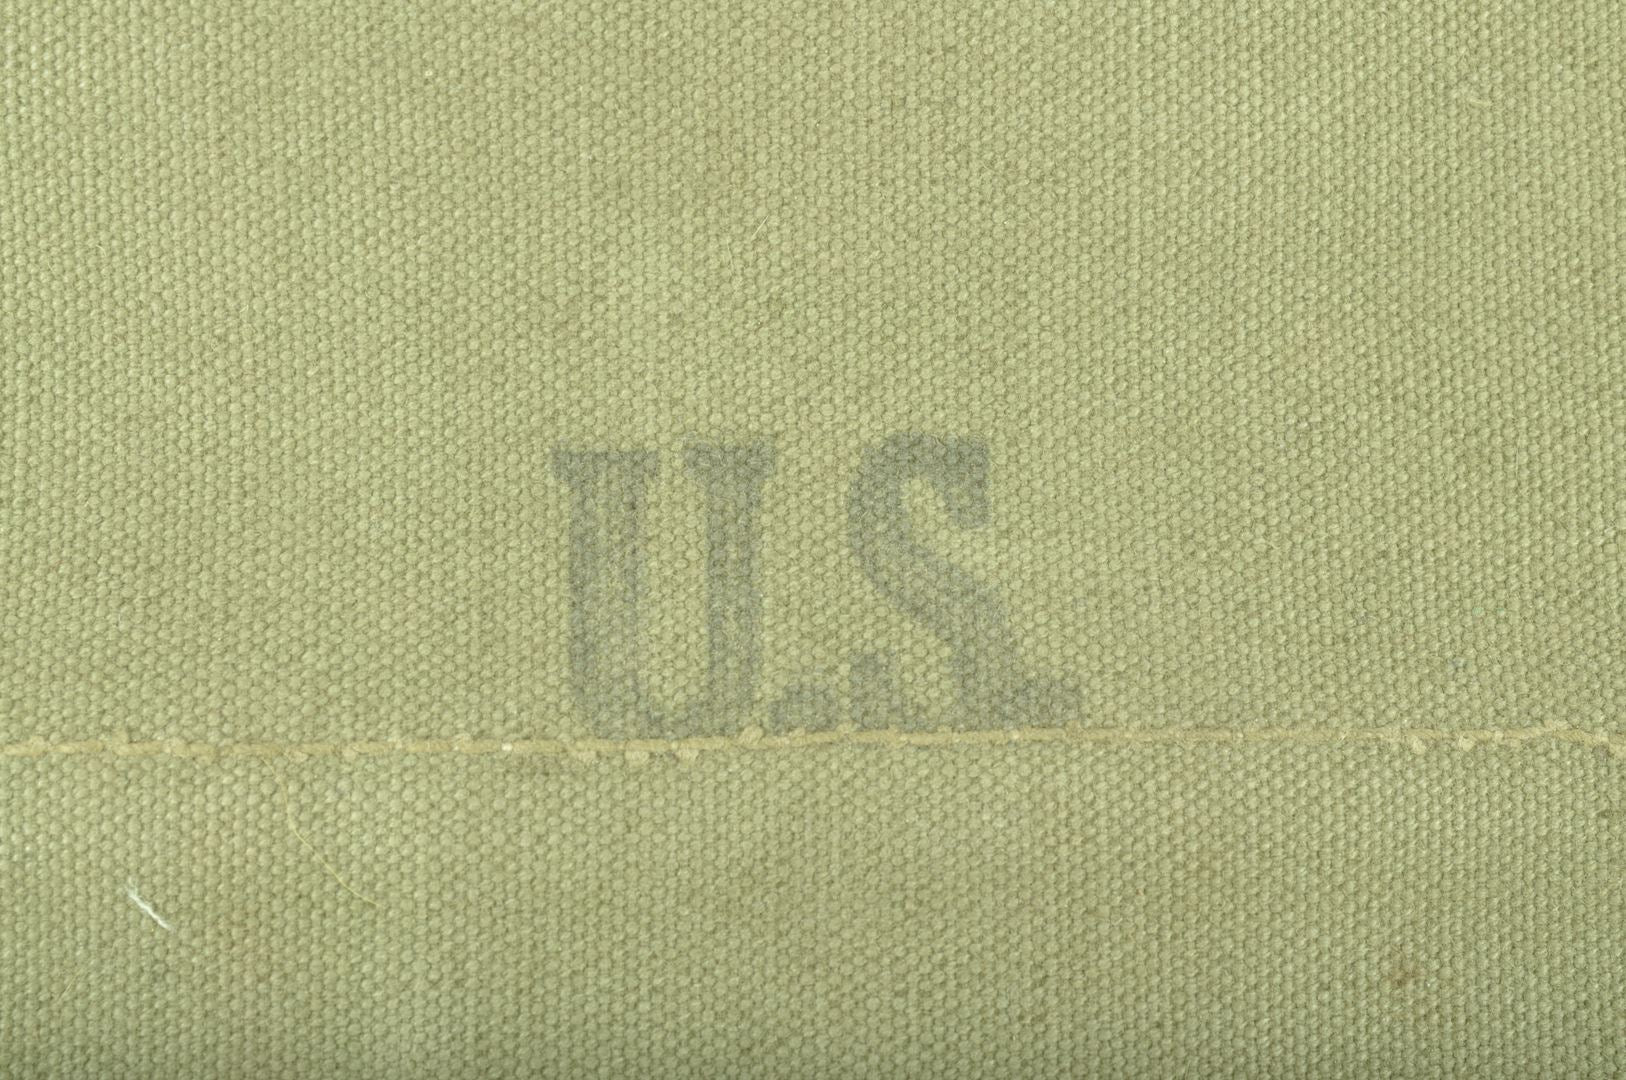 Porte Carte Américain M38 daté 1943